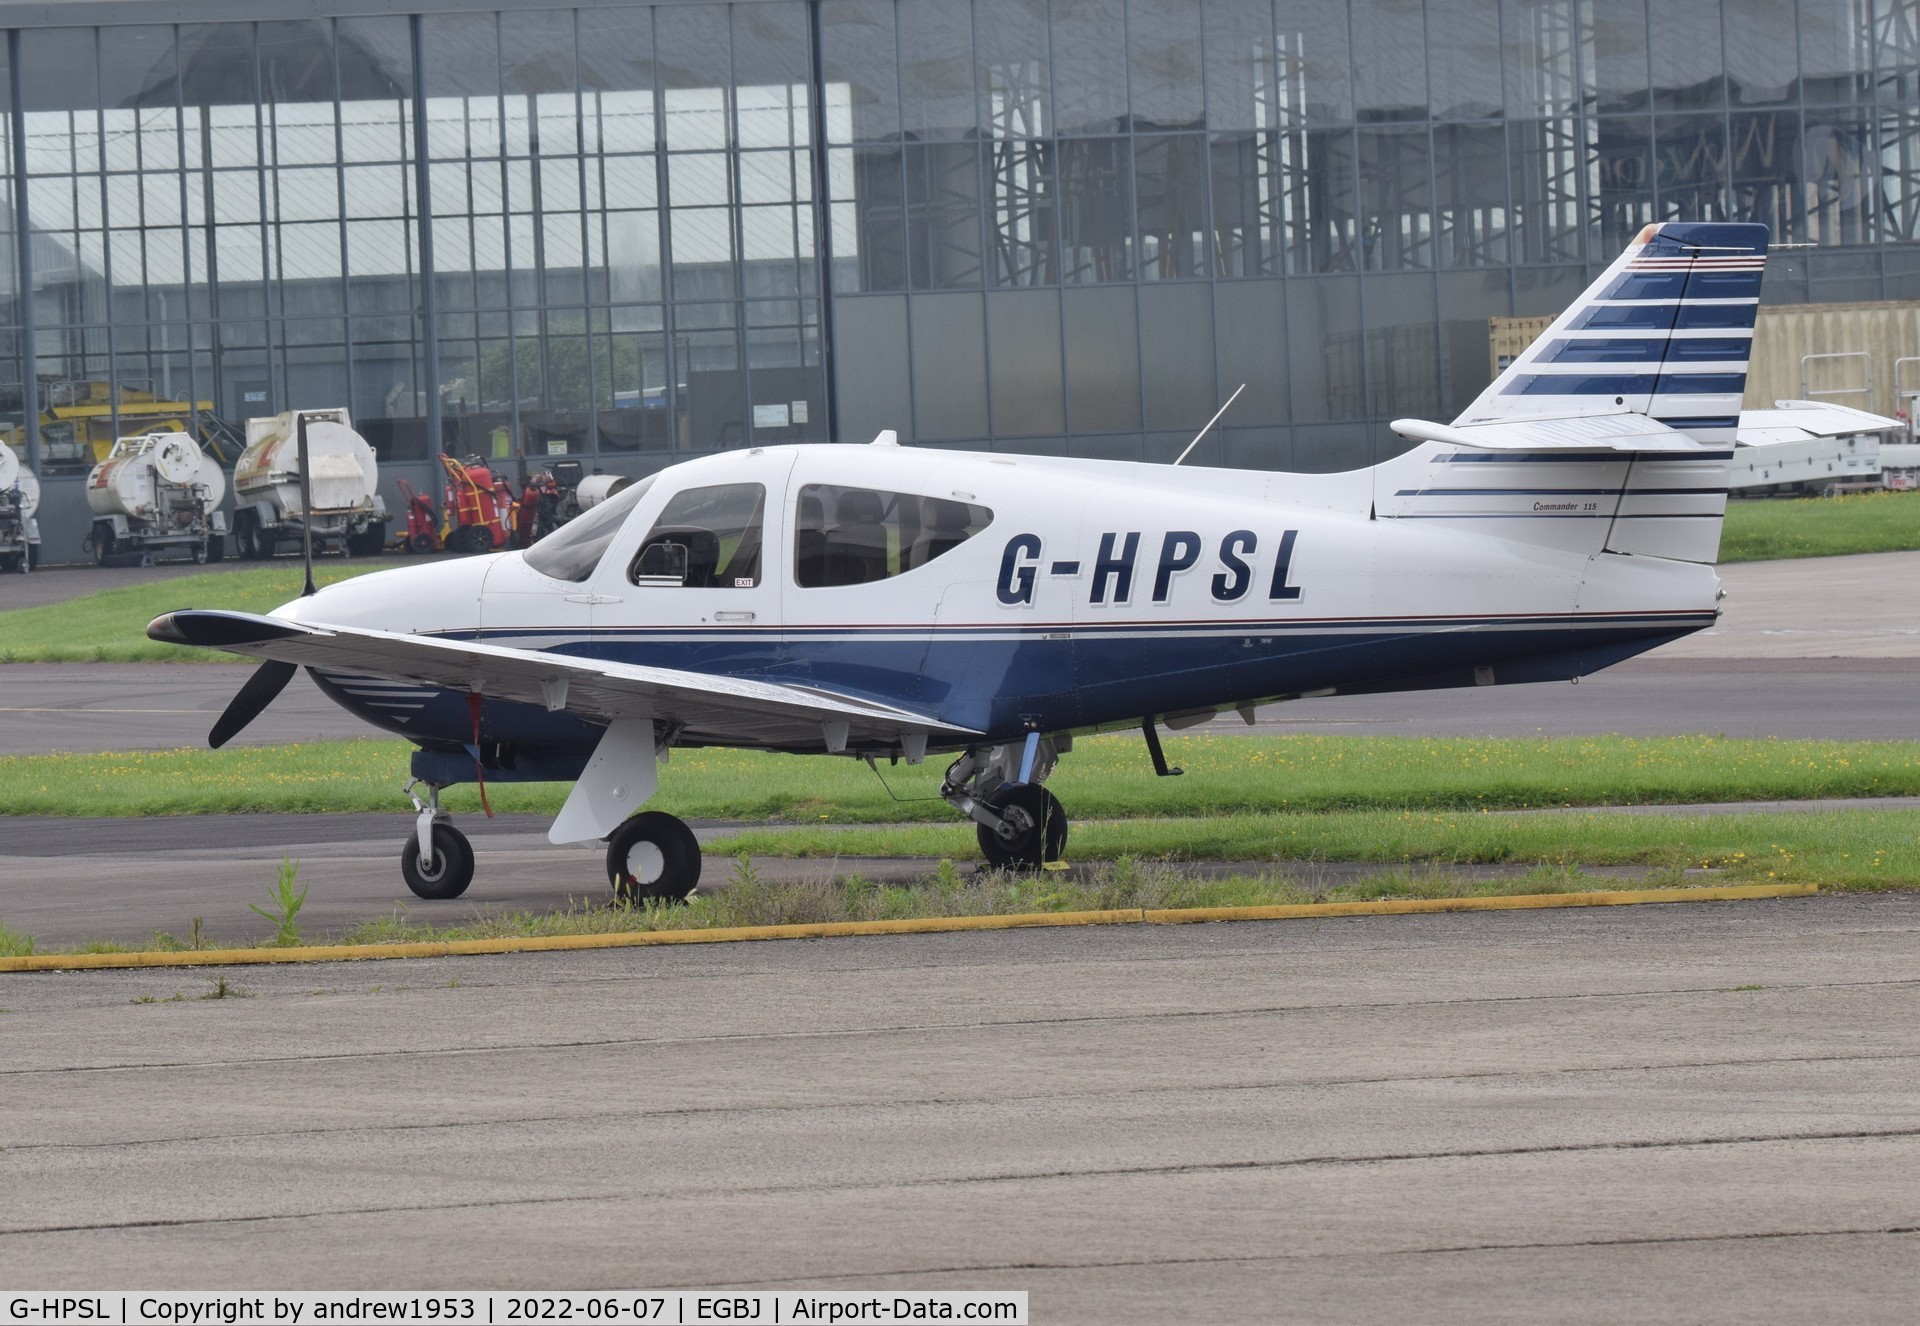 G-HPSL, 2001 Commander 114B C/N 14682, G-HPSL at Gloucestershire Airport.